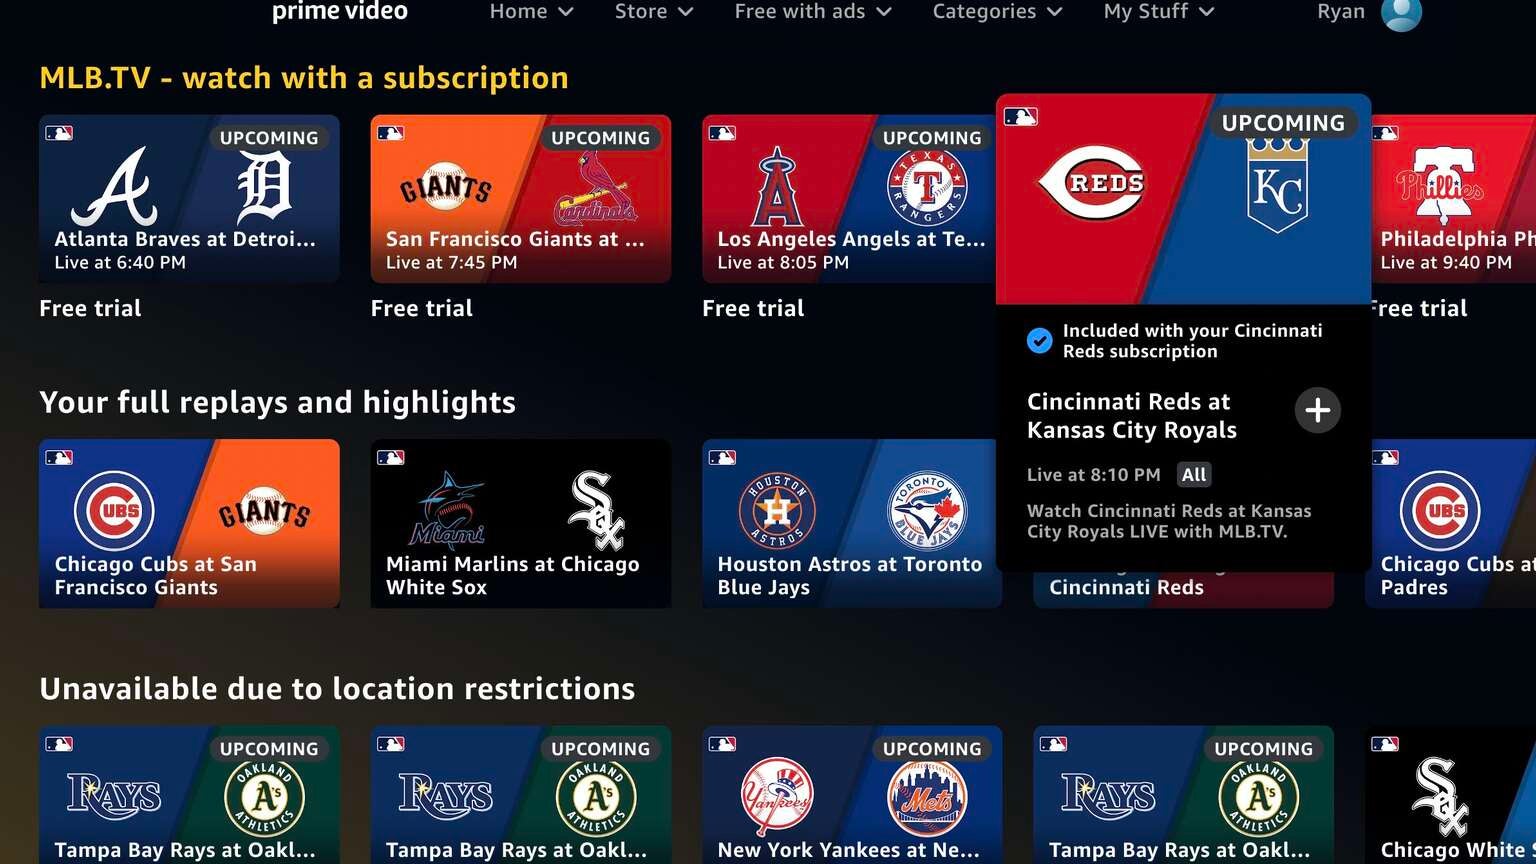 DEAL ALERT Save 55 on MLB.TV SingleTeam Package via Prime Video